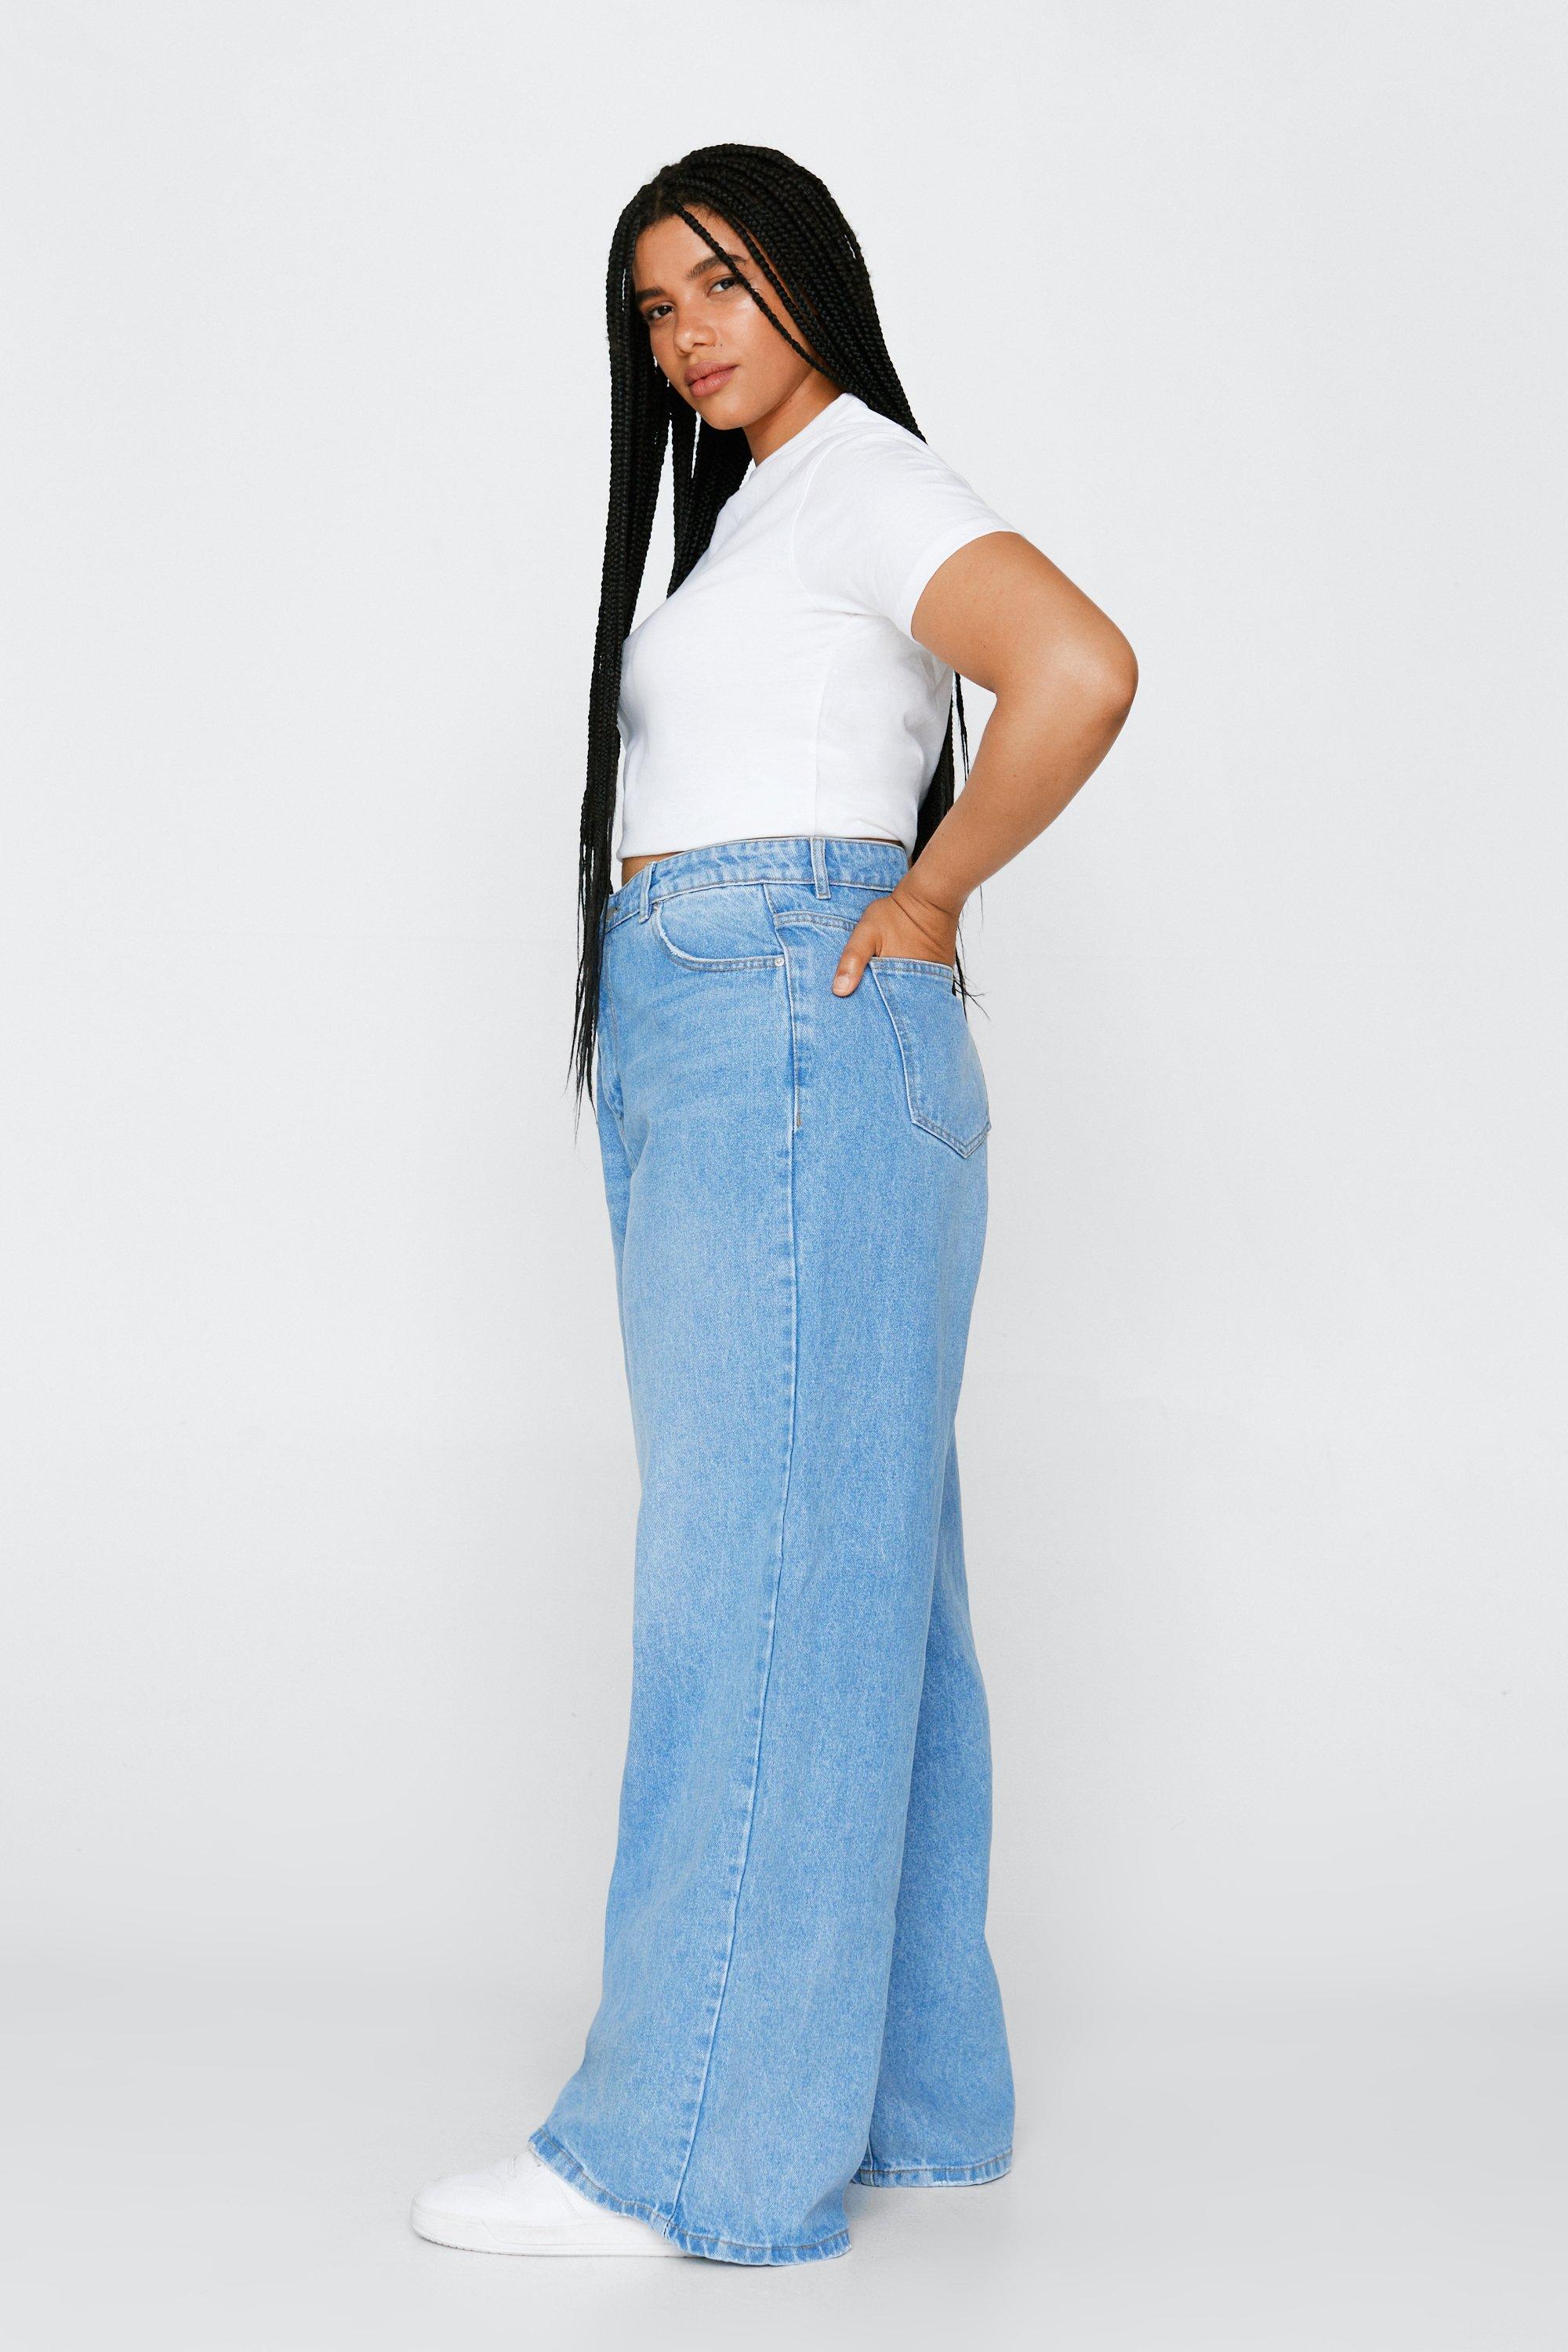 https://media.boohoo.com/i/boohoo/bgg02516_mid%20blue_xl_1/female-mid%20blue-plus-size-denim-wide-leg-baggy-jeans